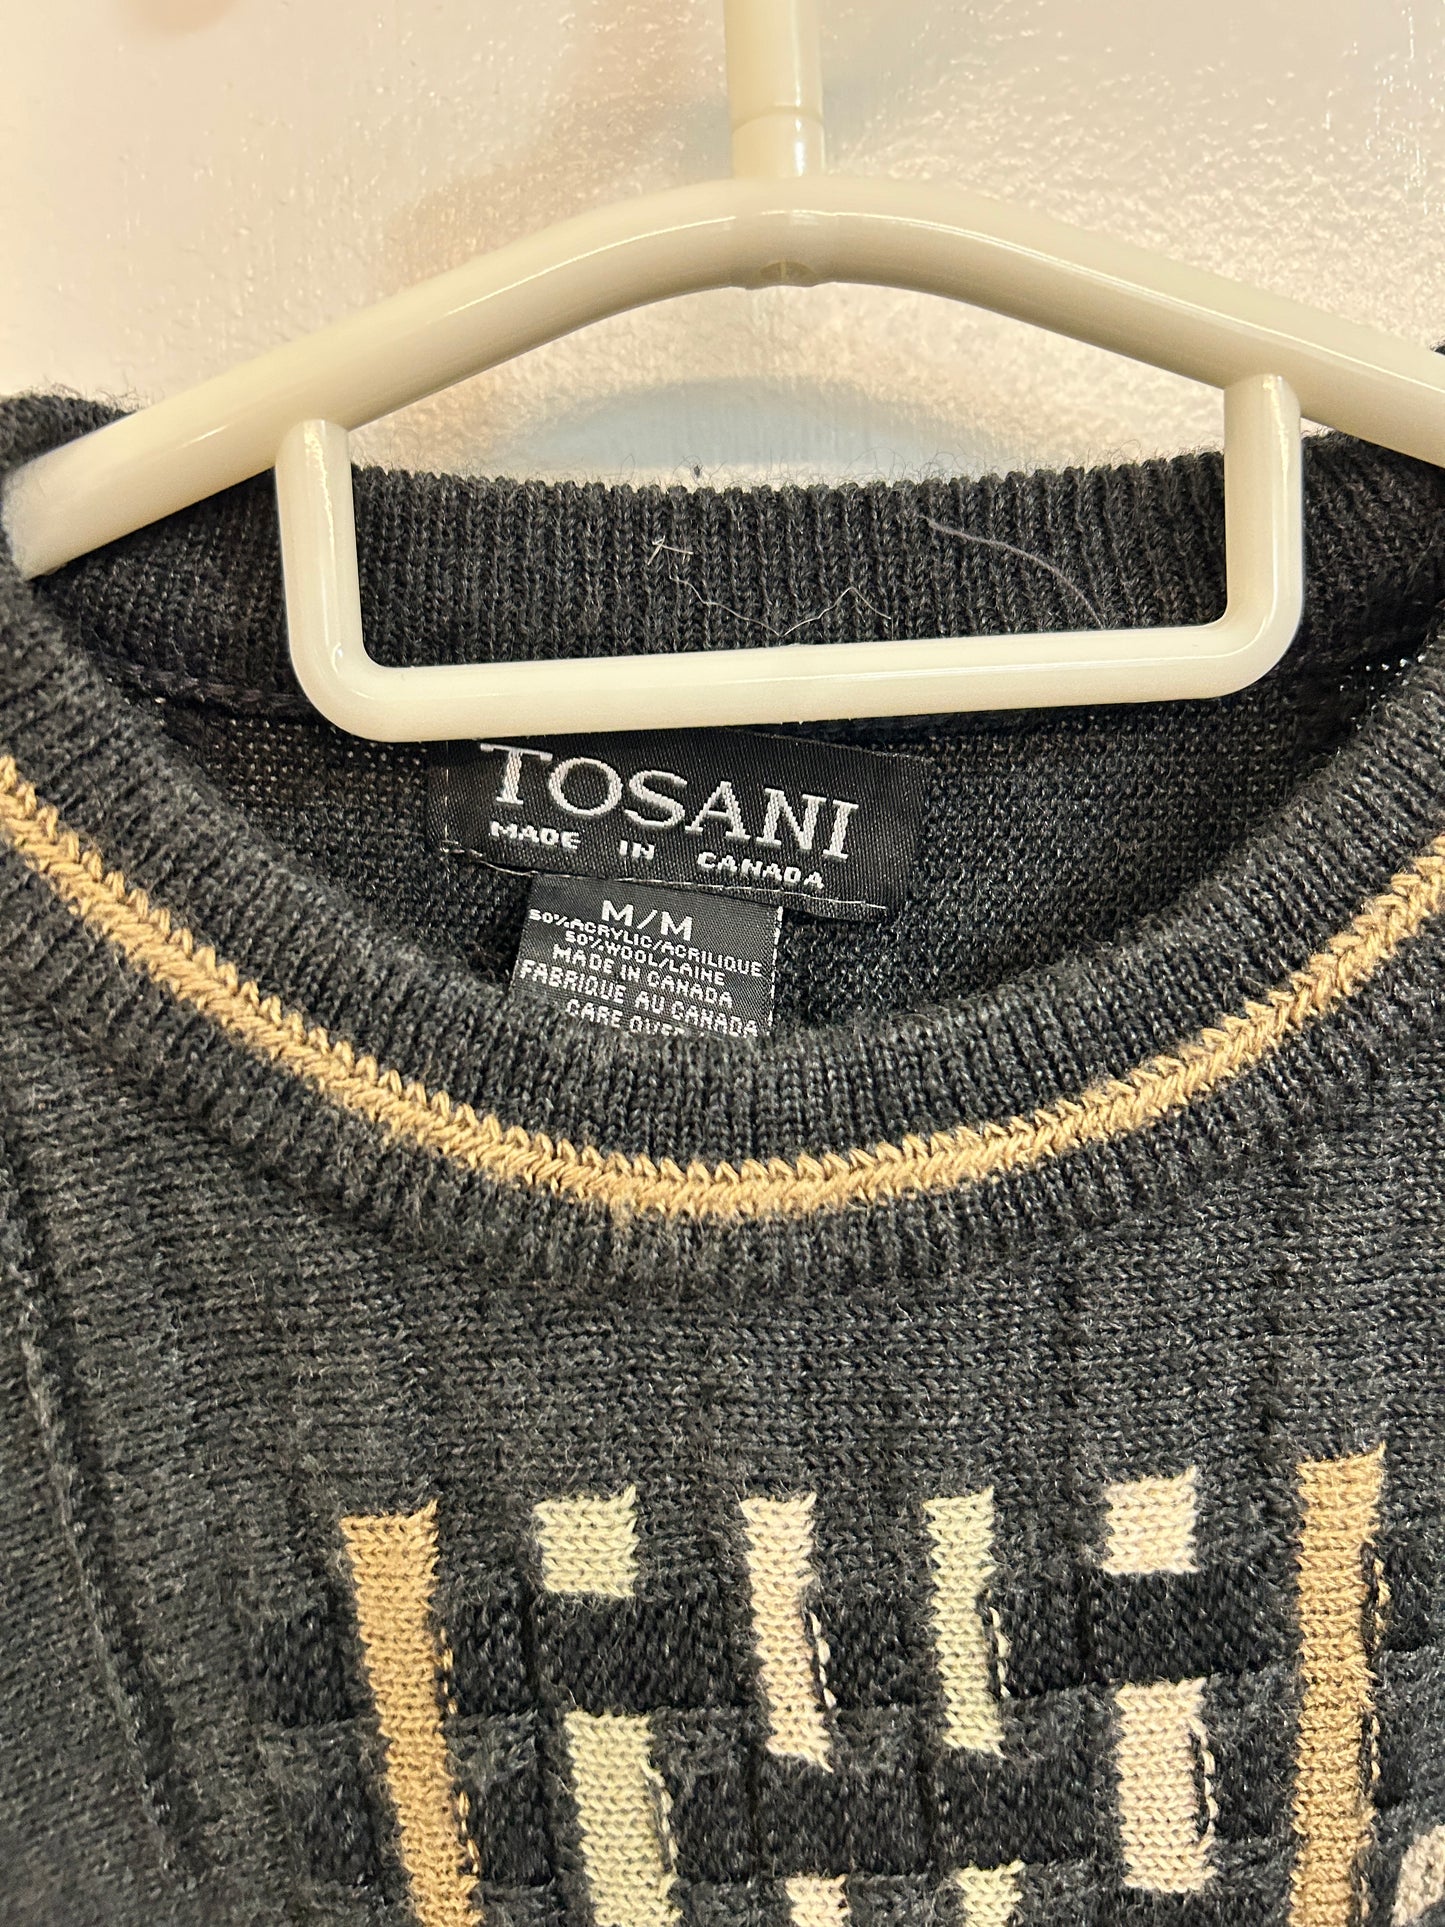 Tosani 3D Textured Knit (M)